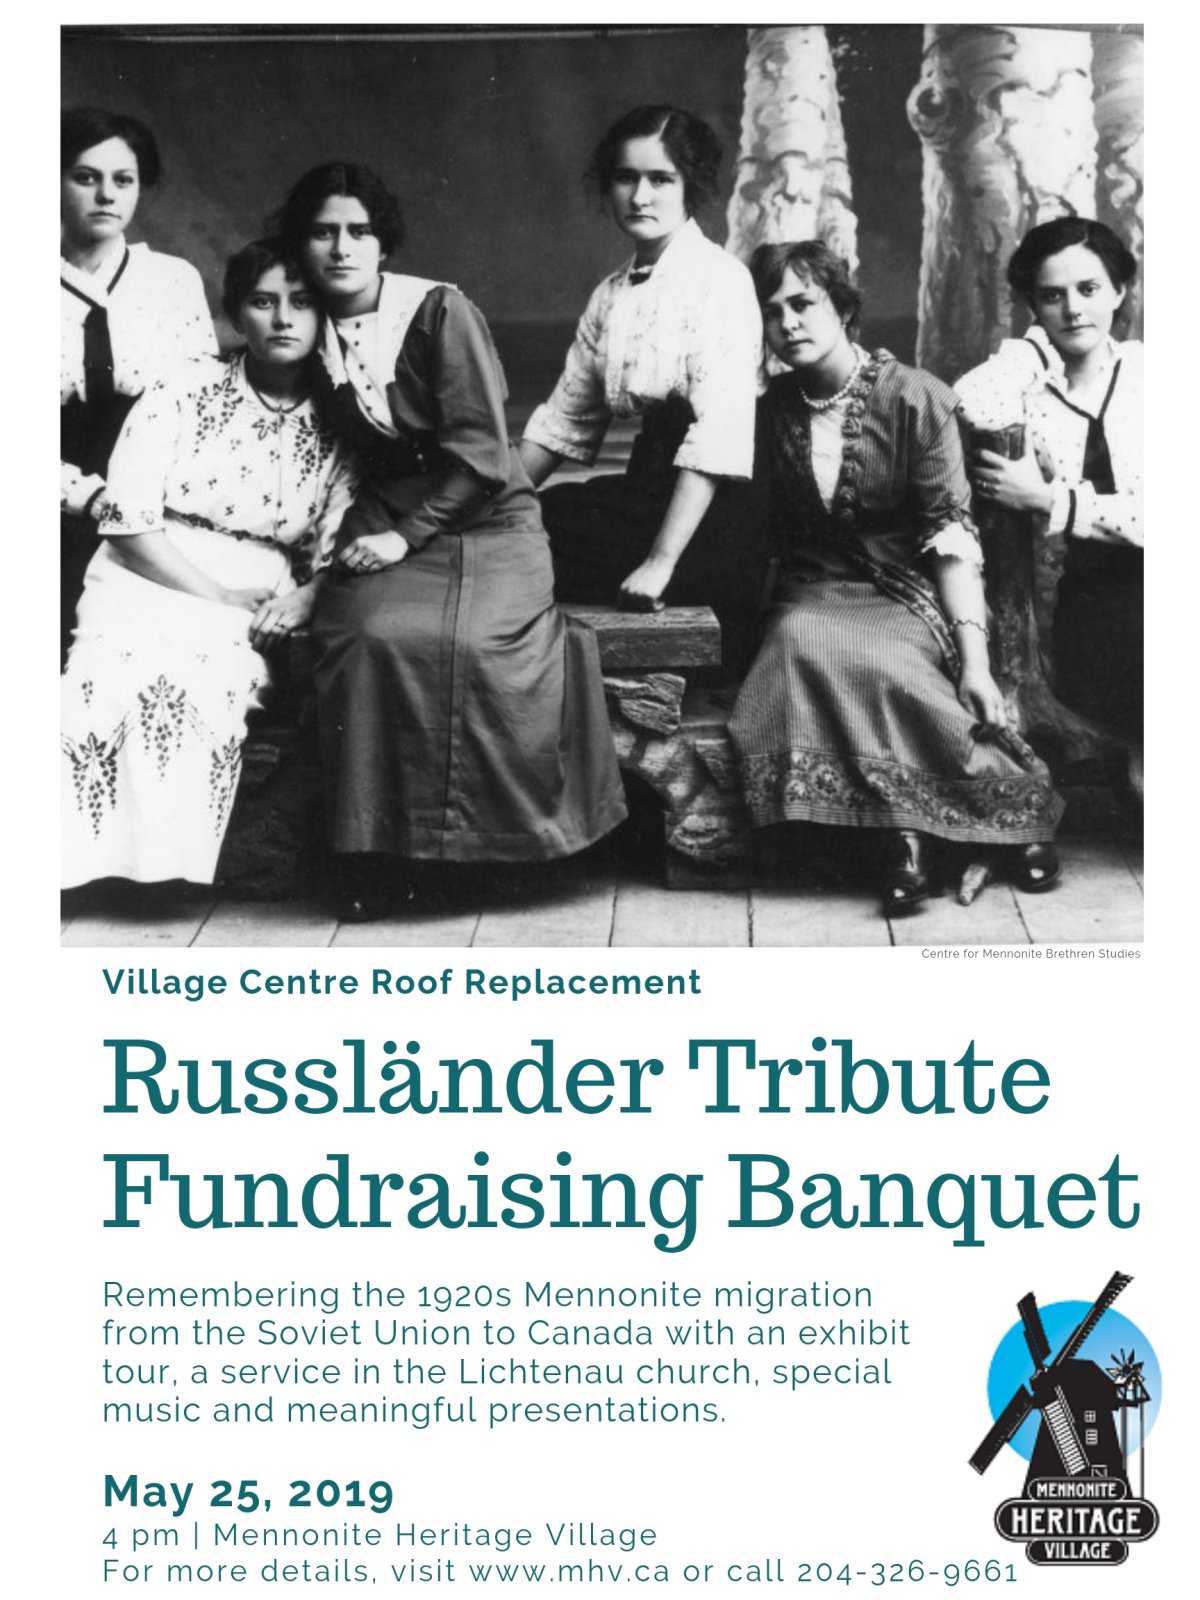 Russlaender Tribute Fundraising Banquet - image